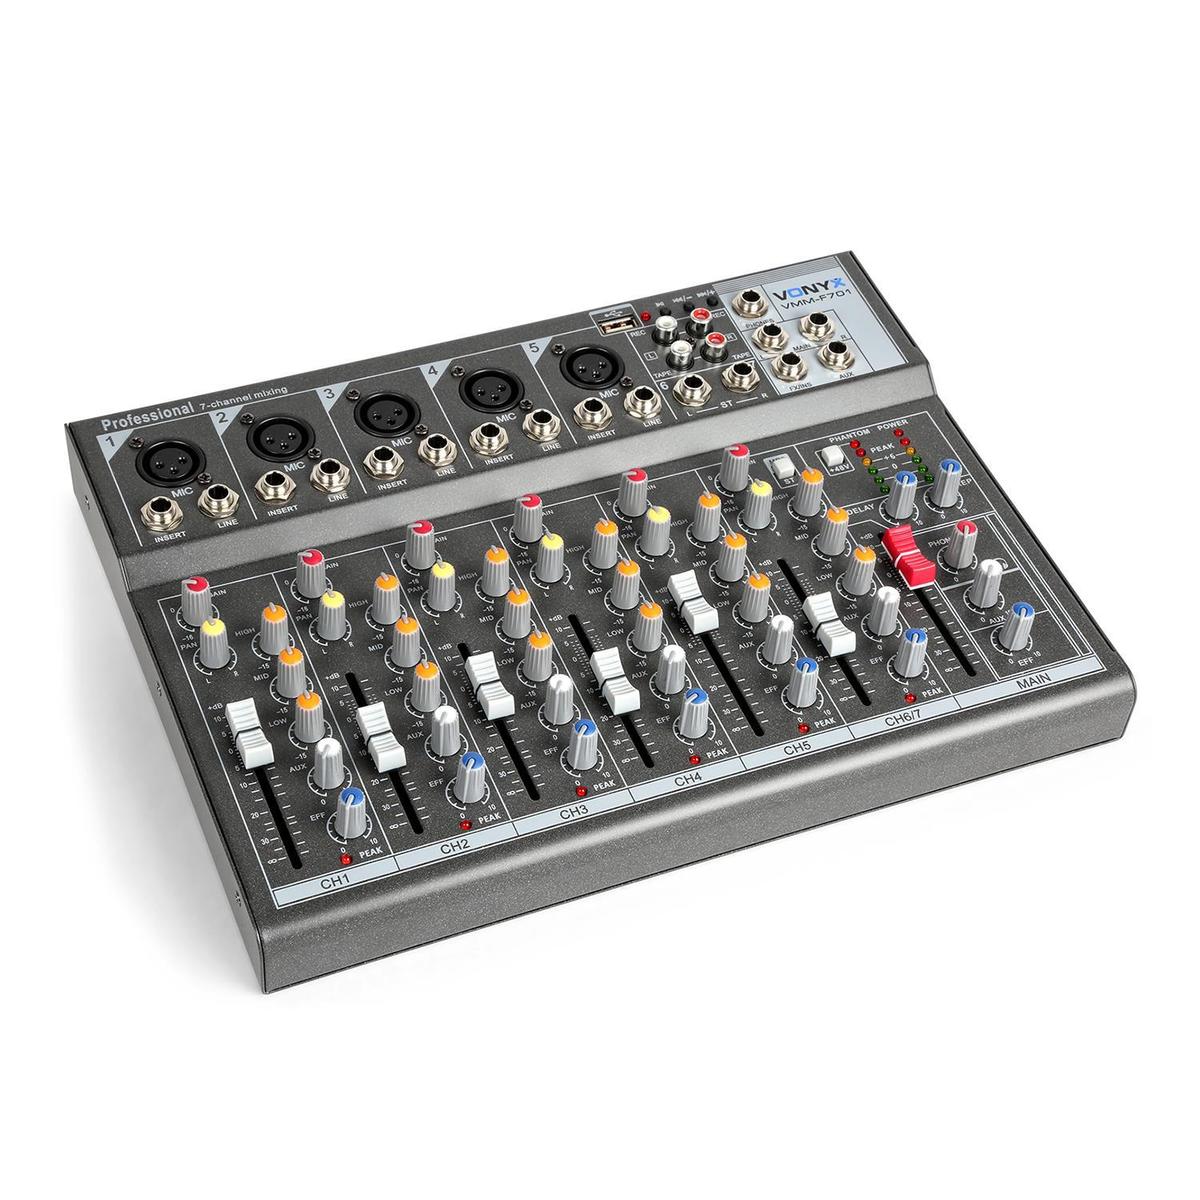 Vonyx Vmm-f701 - Table De Mixage 7 Canaux - Port Usb, 5 X Entree Mic/ligne Mono, 1 X Entree Ligne Stereo